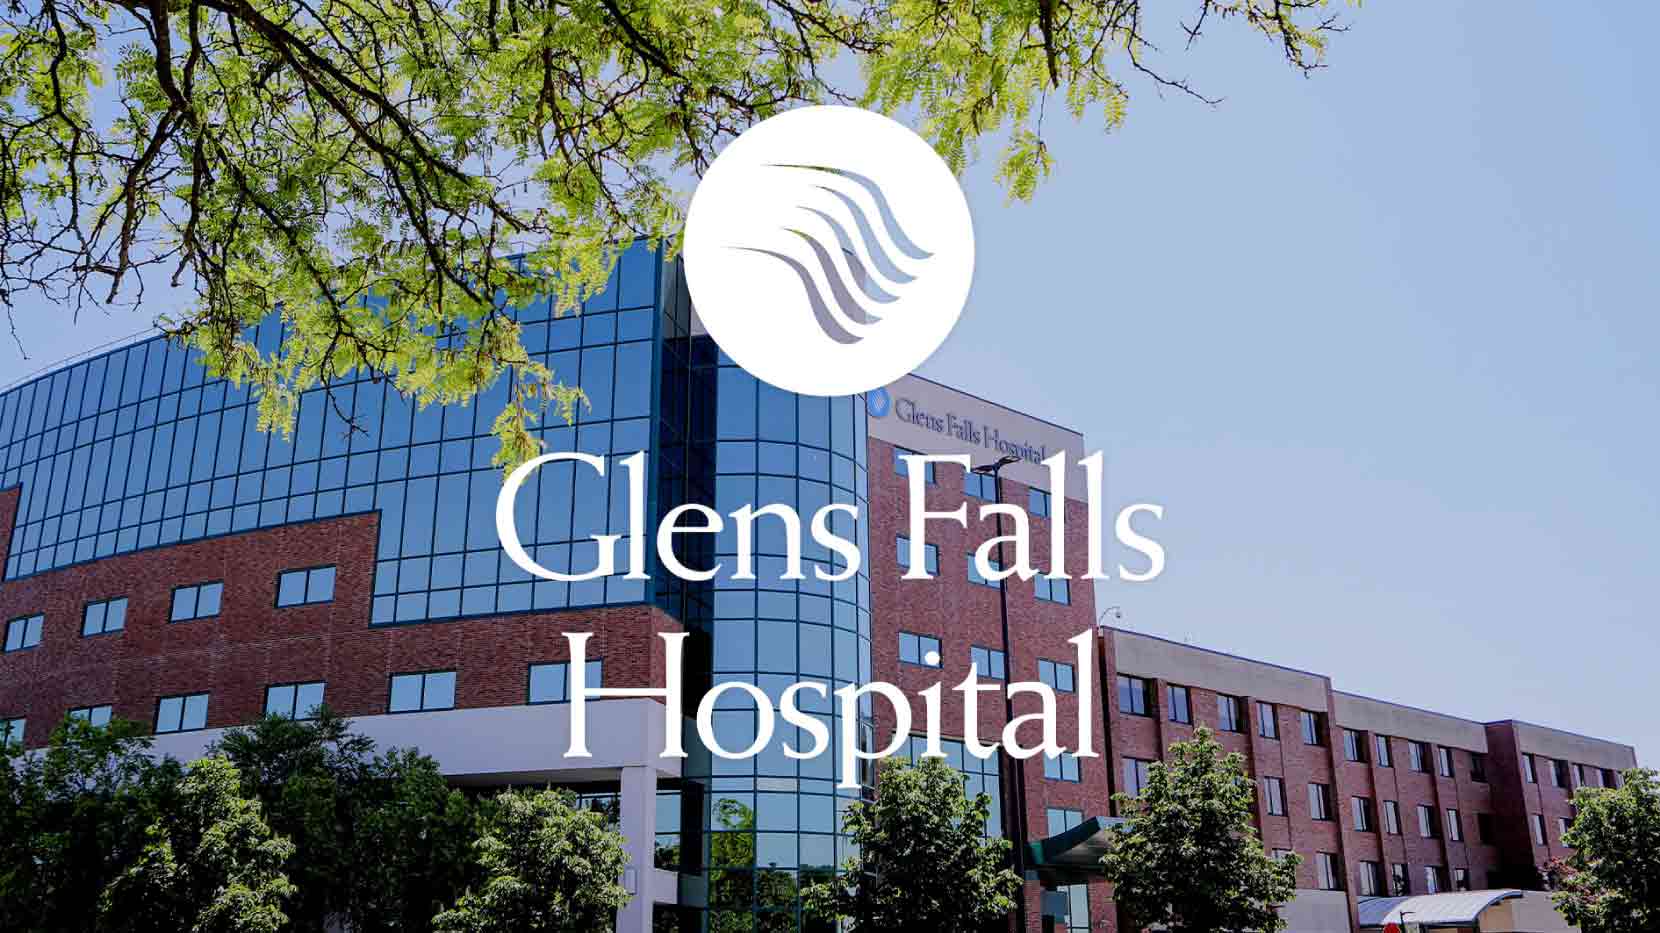 Glens Falls Hospital_hospital exterior background